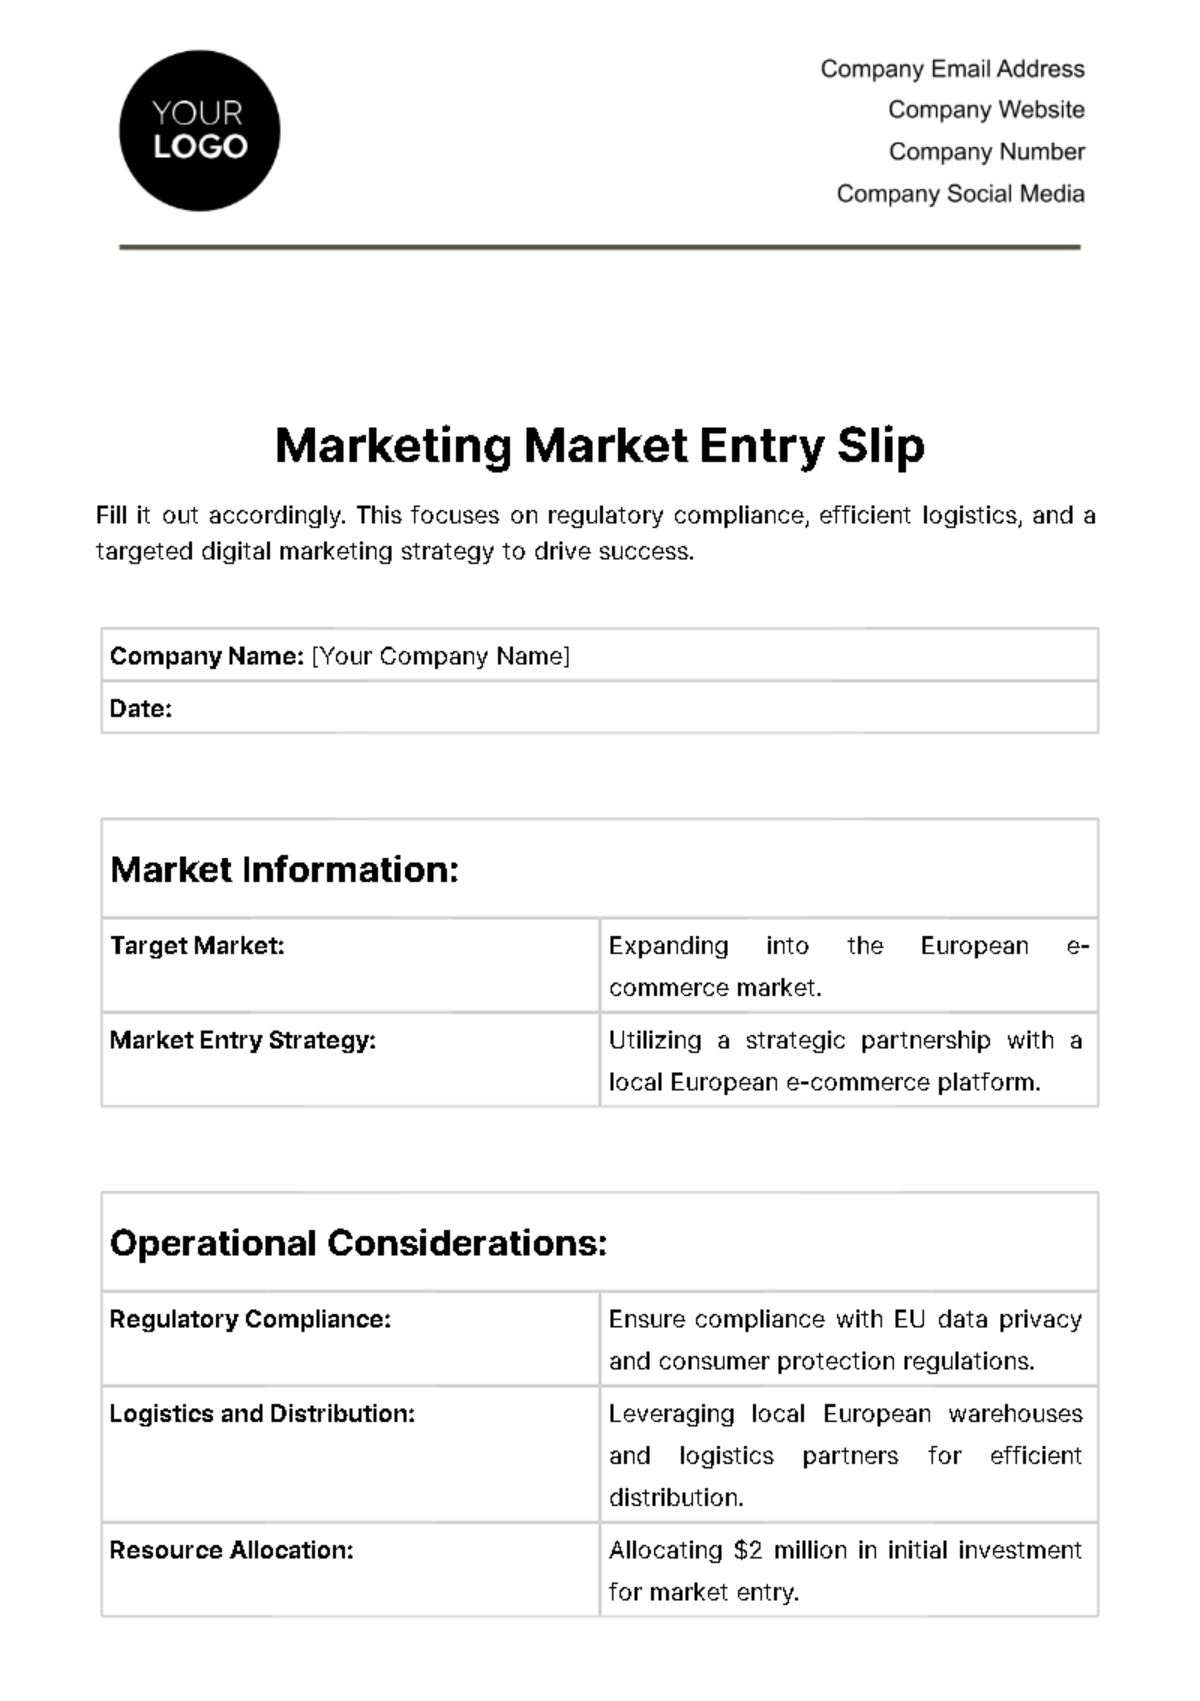 Free Marketing Market Entry Slip Template